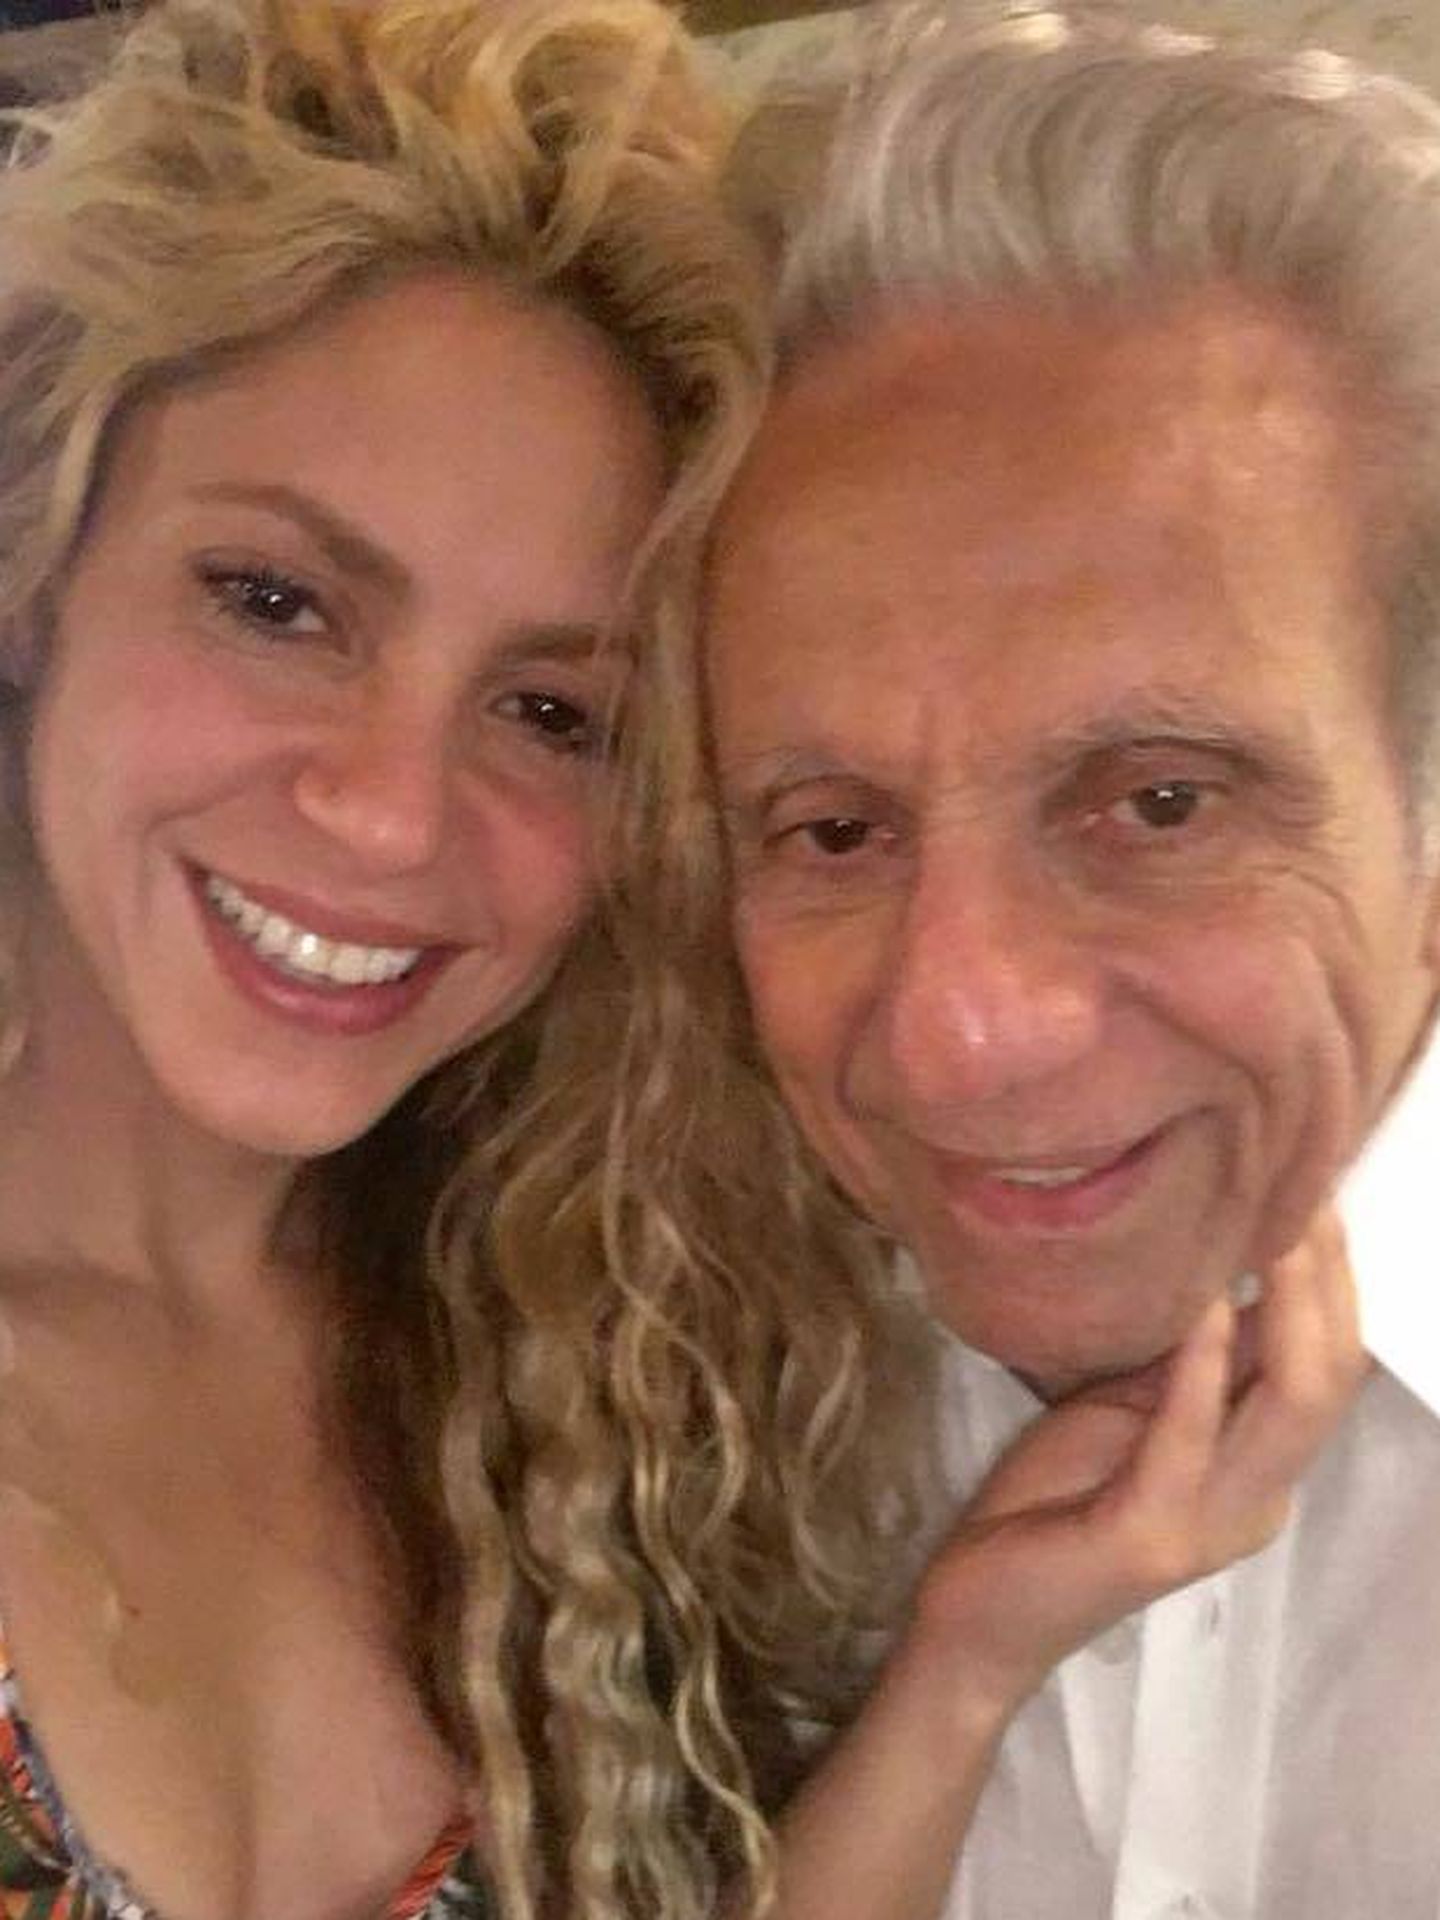 Shakira con su padre, William Mebarak, hace un año. (Facebook)